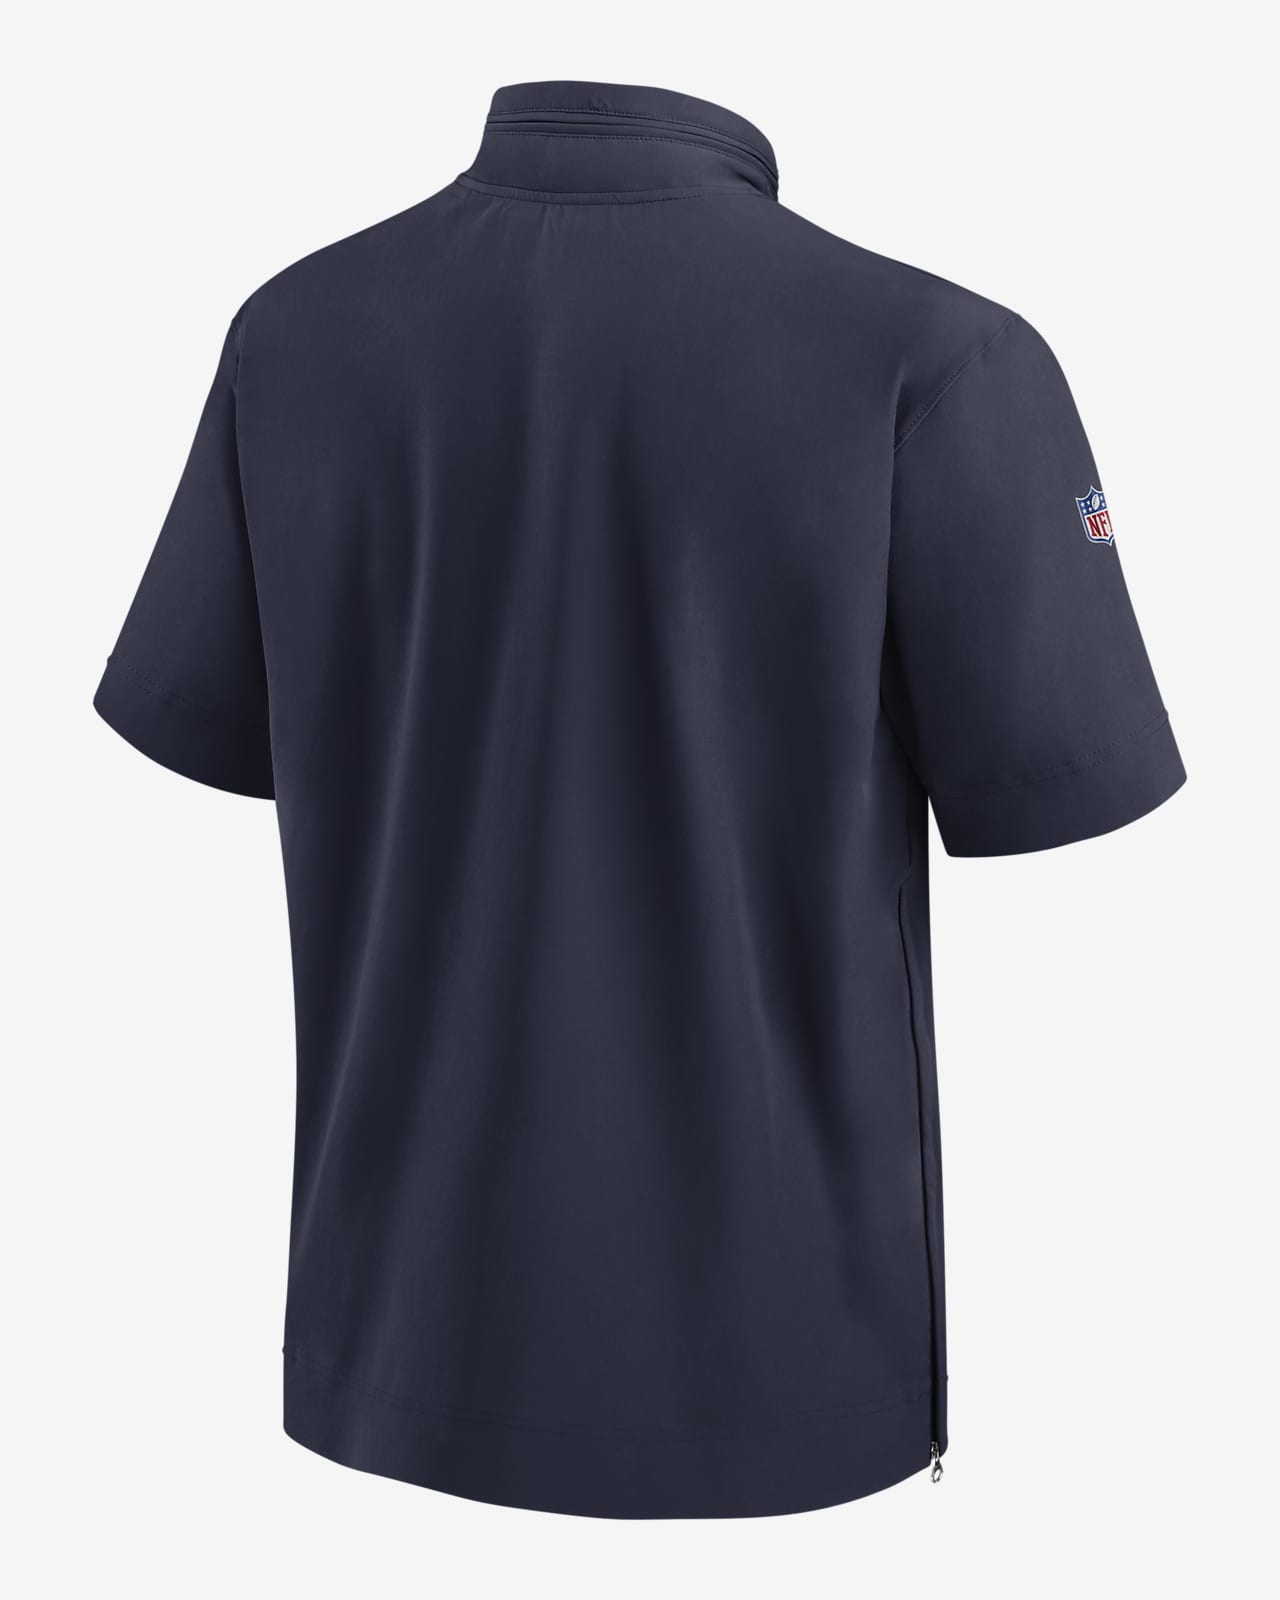 Nike Sideline Coach (NFL Dallas Cowboys) Men's Short-Sleeve Jacket